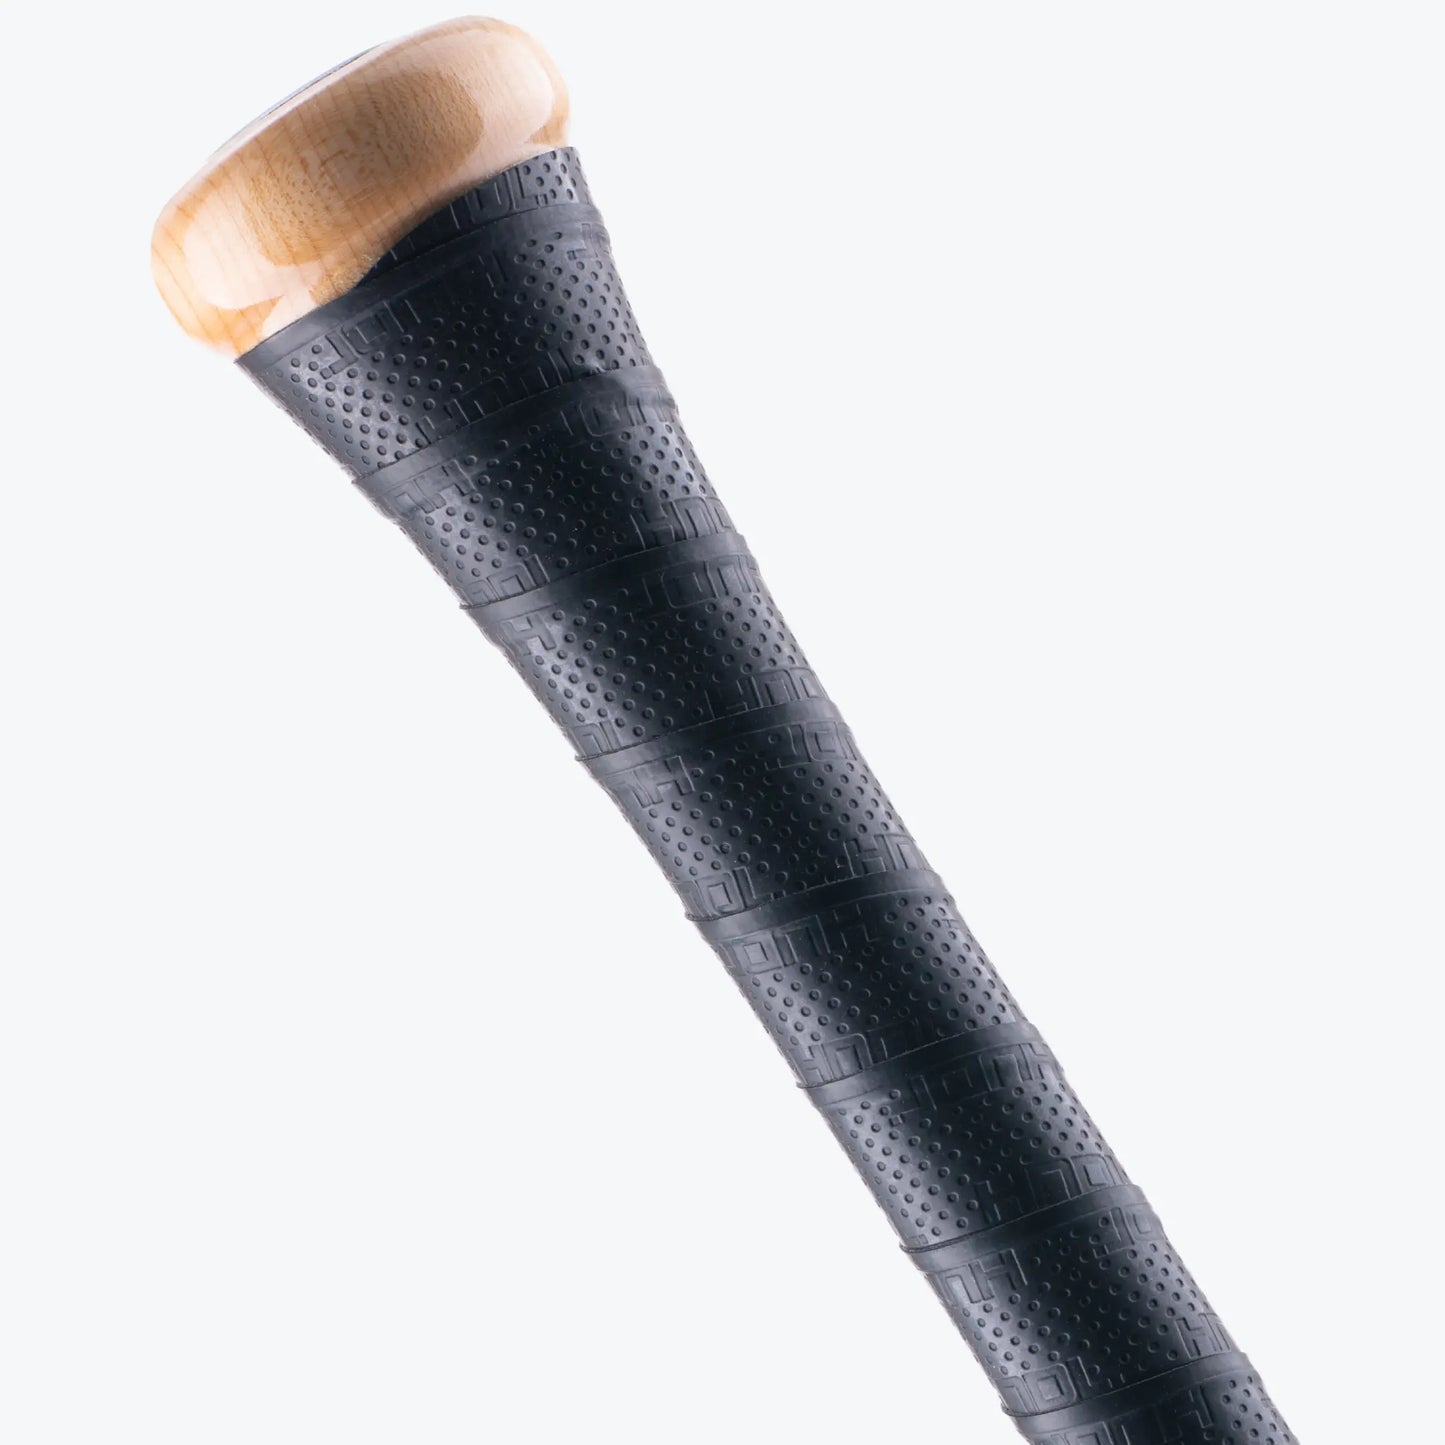 HNDL Bat Grip - BLACK .5mm